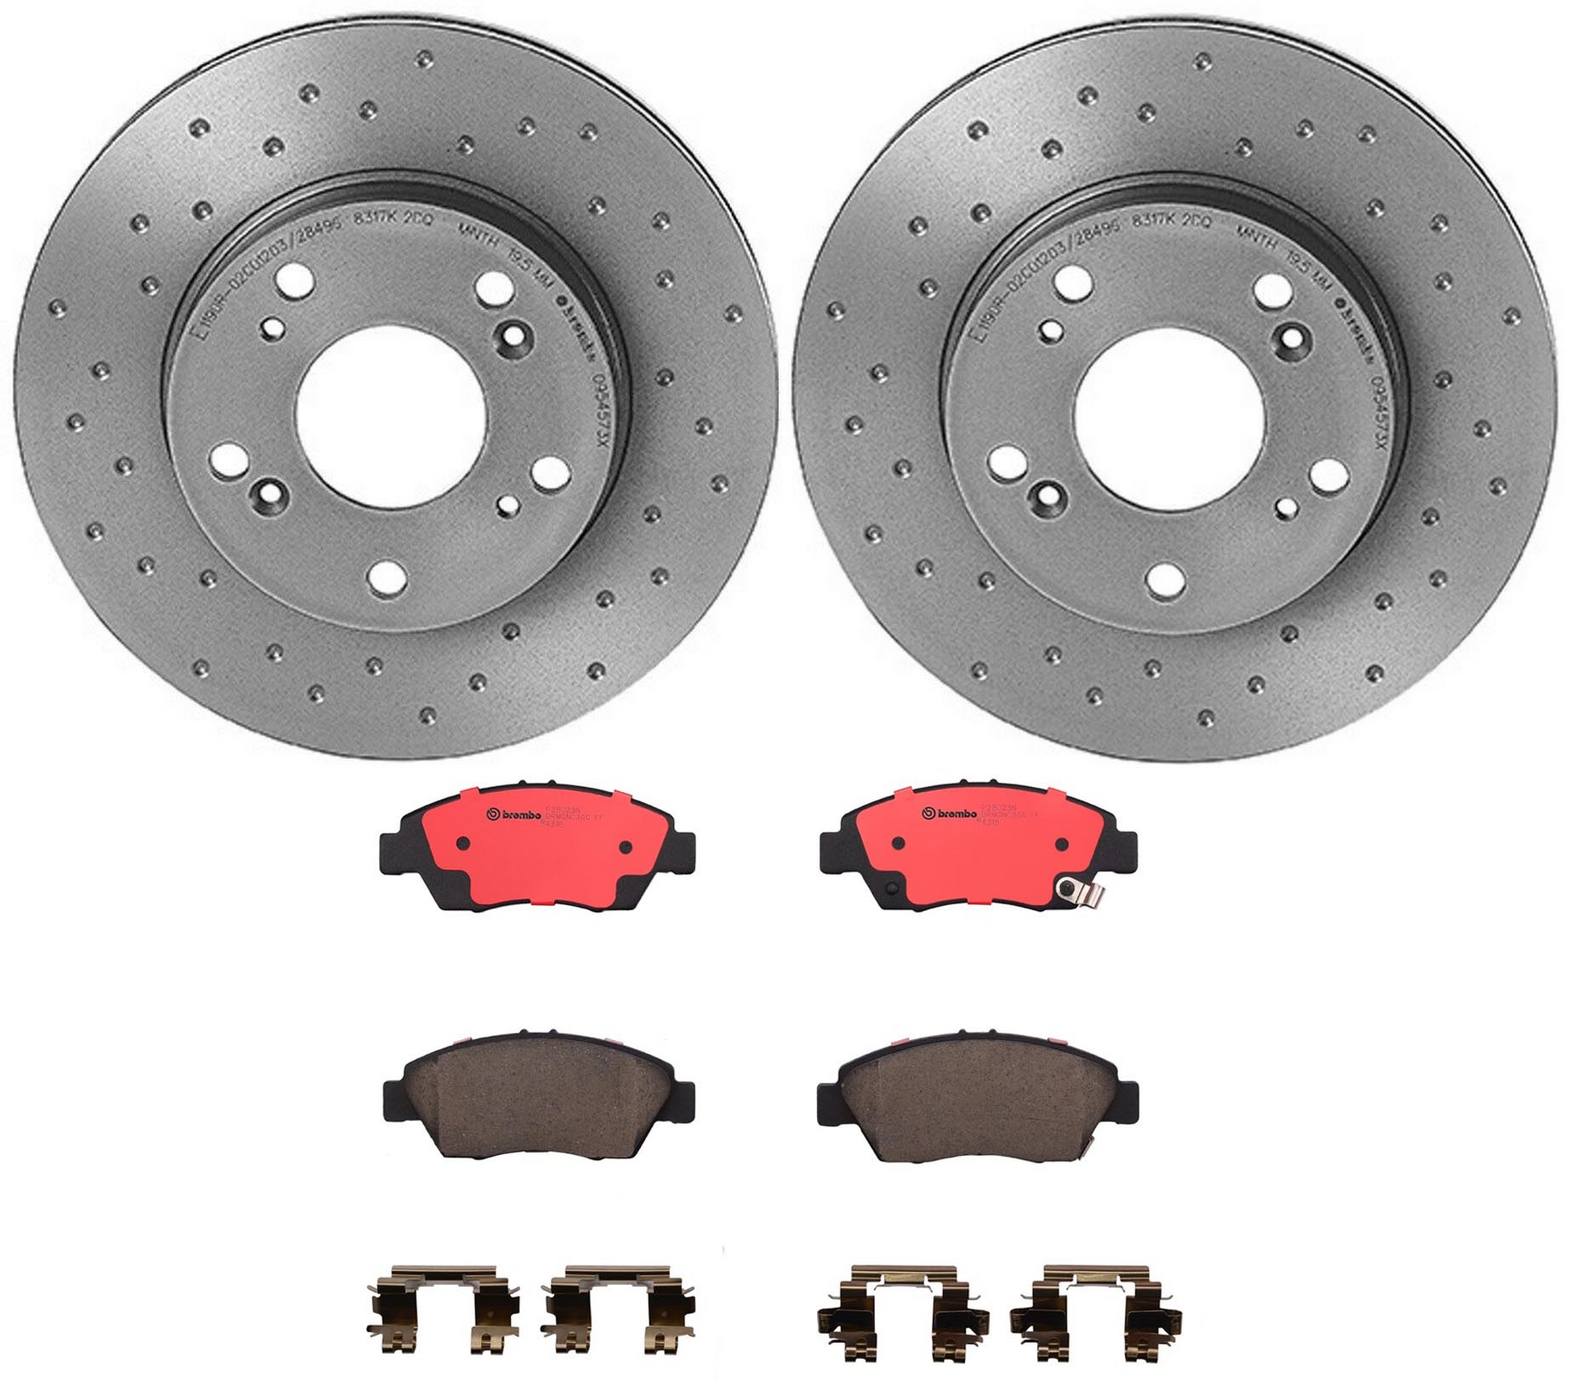 Honda Disc Brake Pad and Rotor Kit - Front (262mm) (Ceramic) (Xtra) Brembo